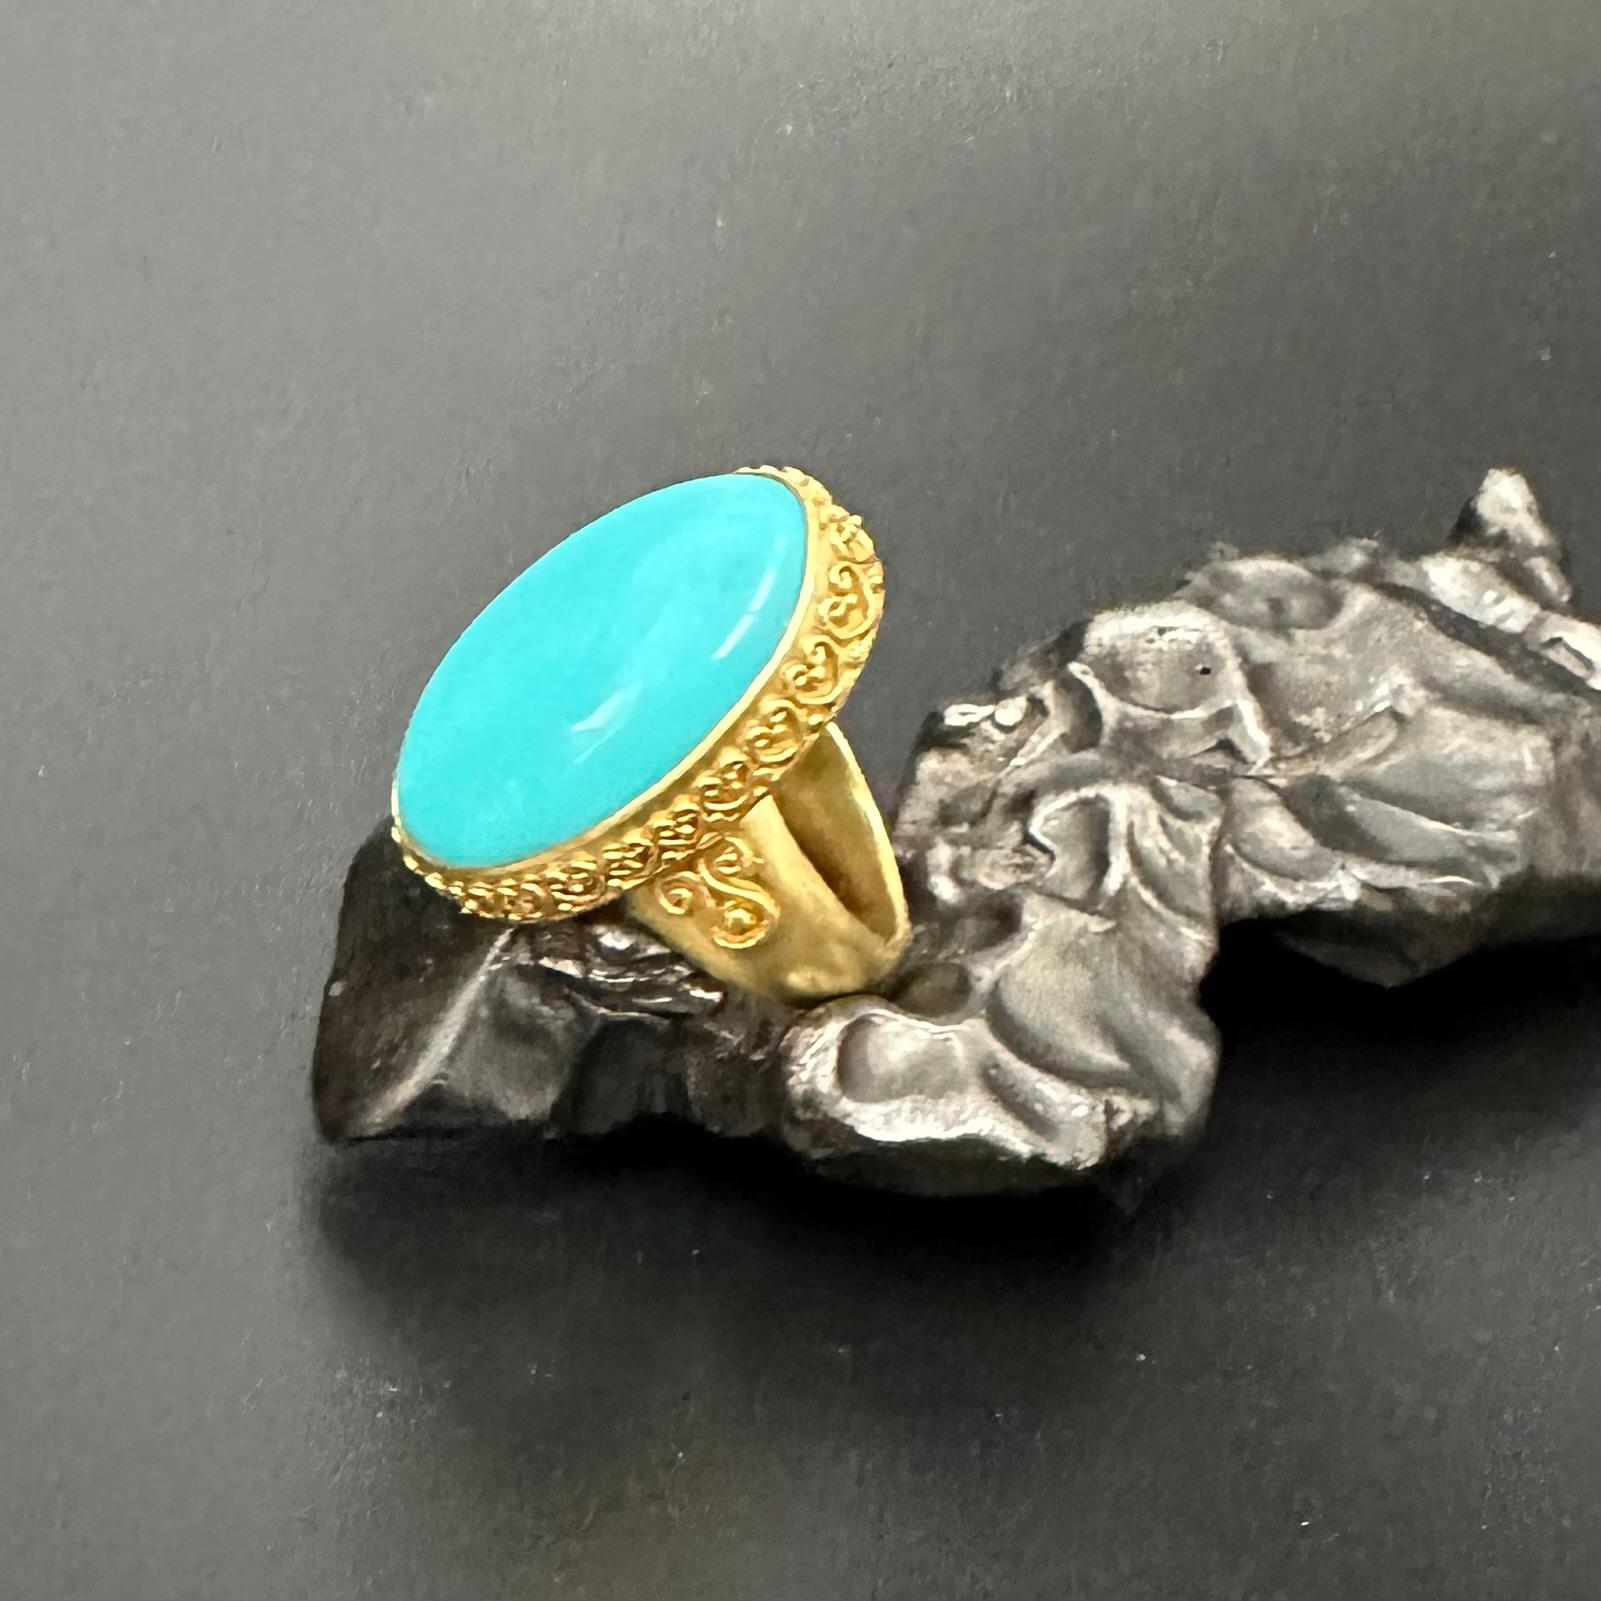 Steven Battelle 16.0 Carats Sleeping Beauty Turquoise 18K Gold Ring For Sale 2